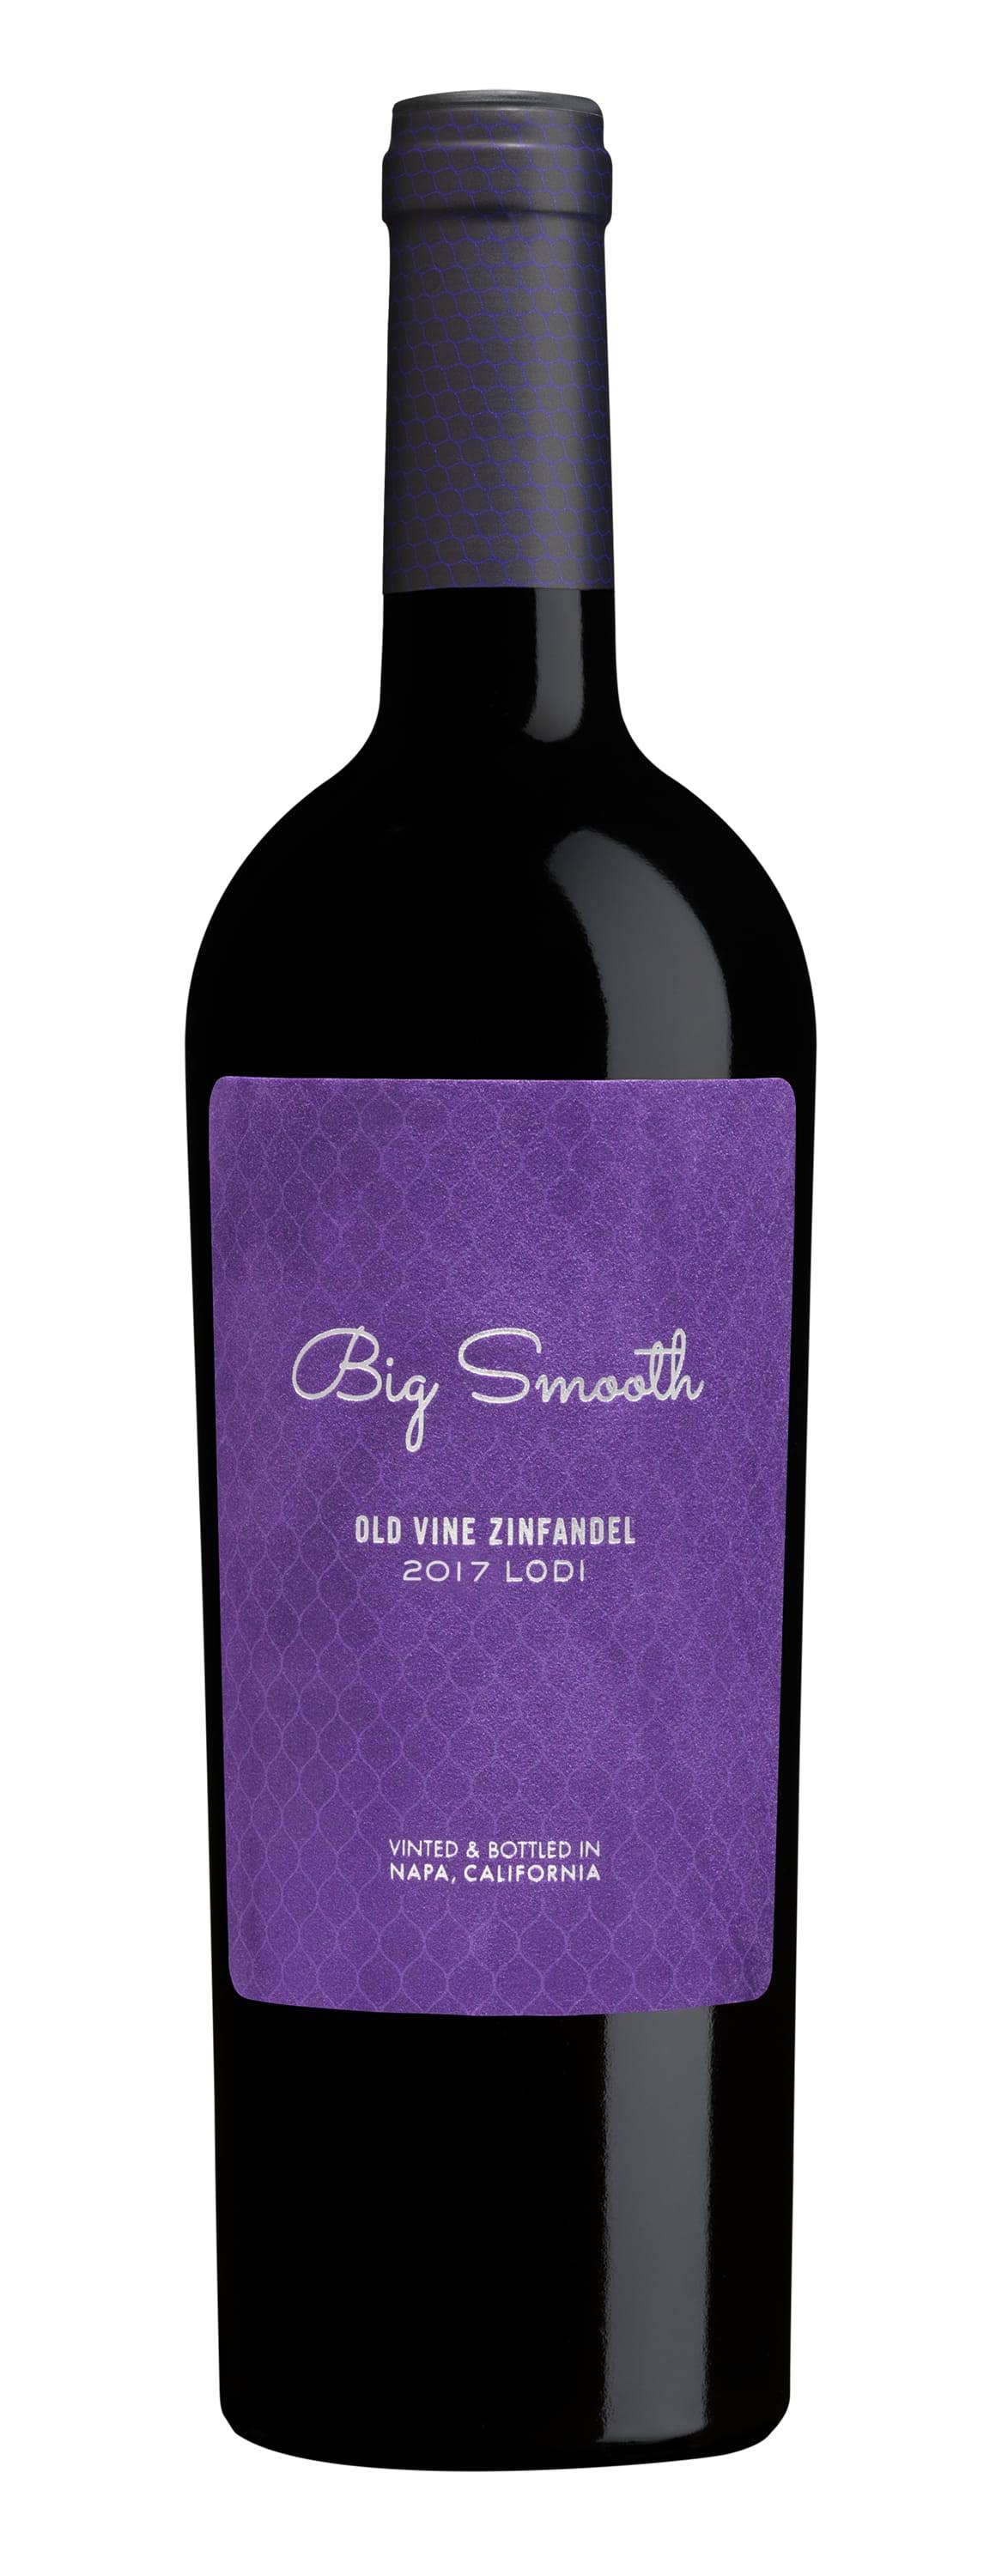 Big Smooth Zinfandel, Old Vine, Big Smooth, 2013 - 750 ml